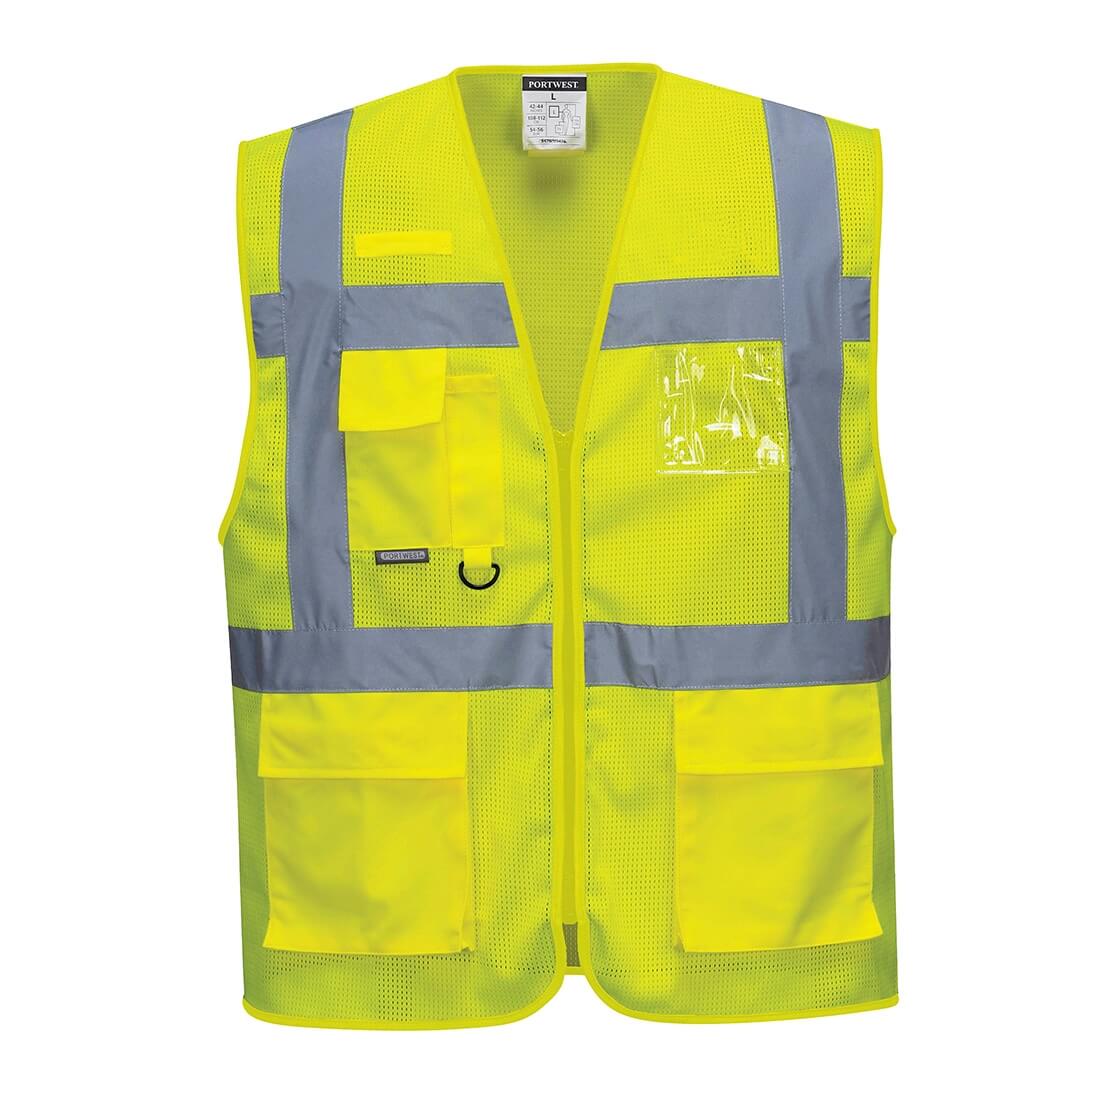 Athens MeshAir Executive Vest - Safetywear